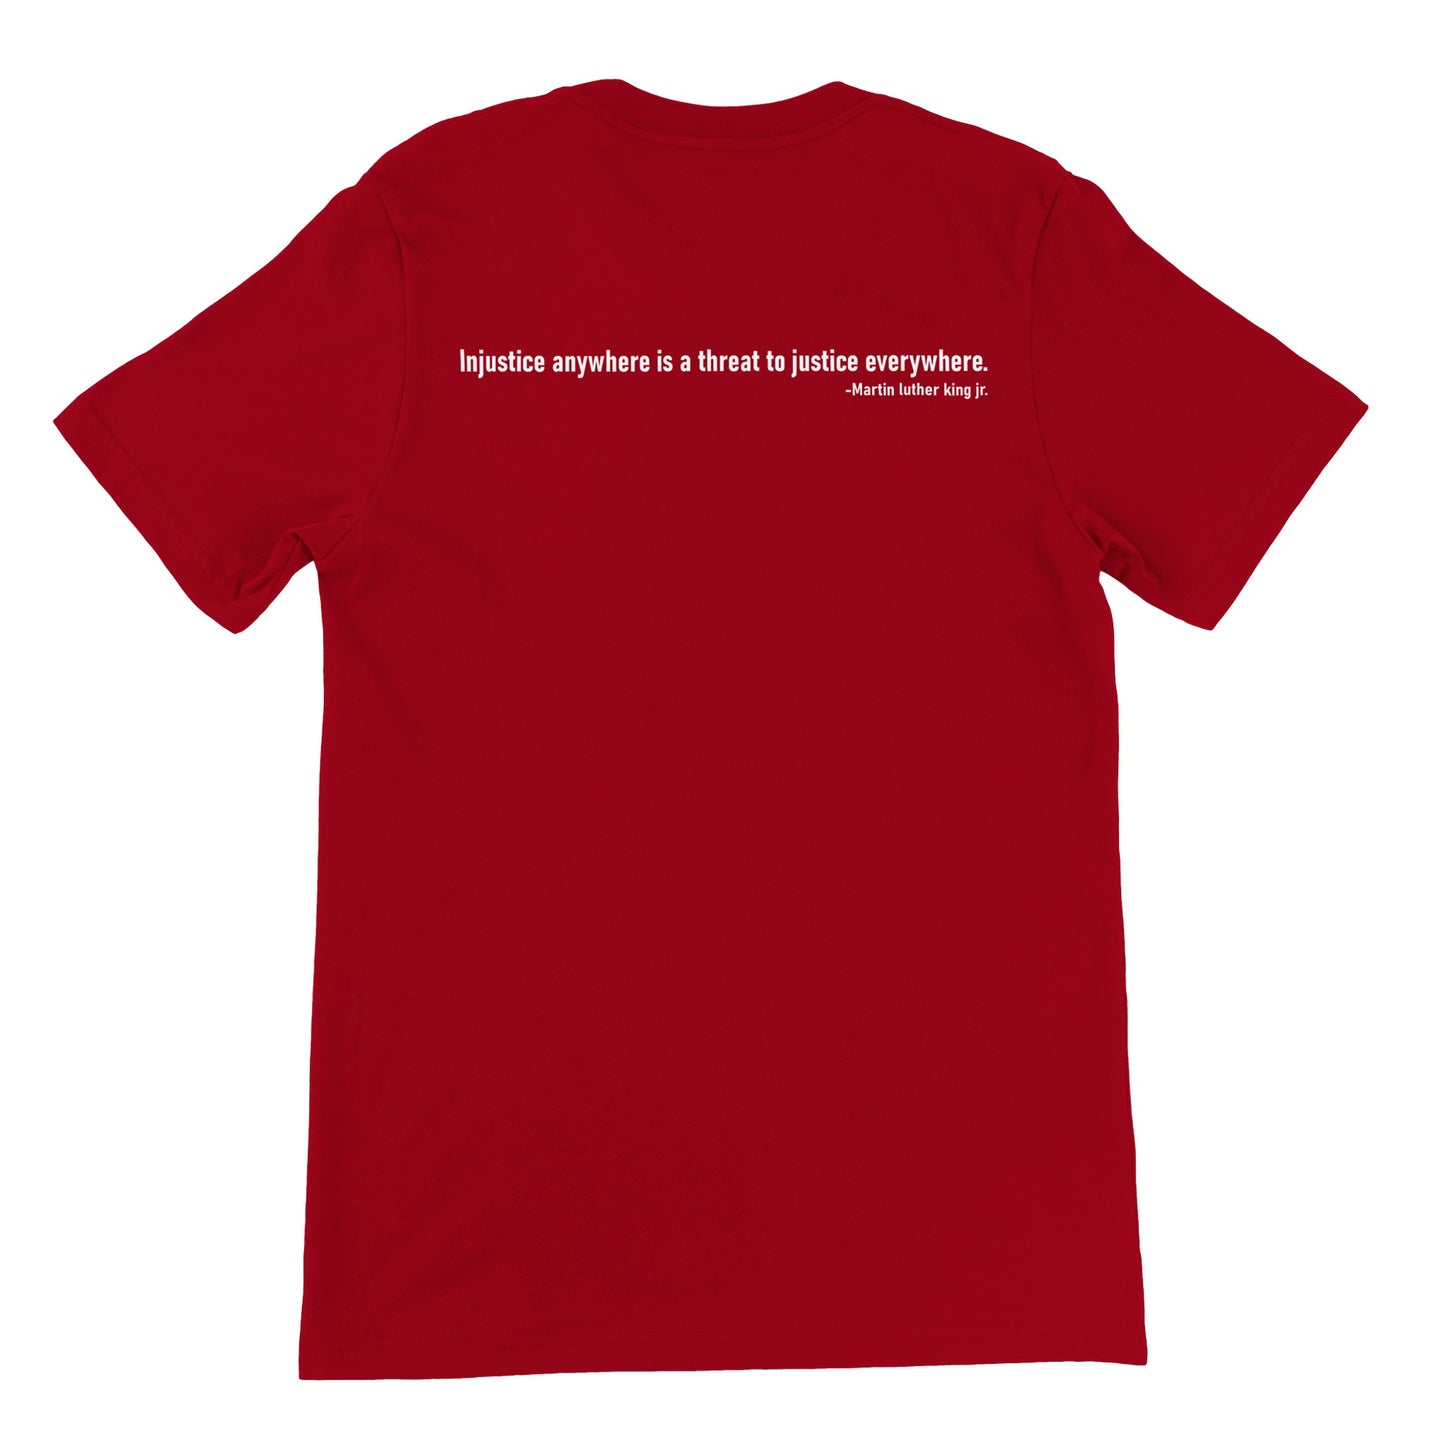 Circle of Flame (မီးတောက်ဝိုင်း) Premium Unisex Crewneck T-shirt